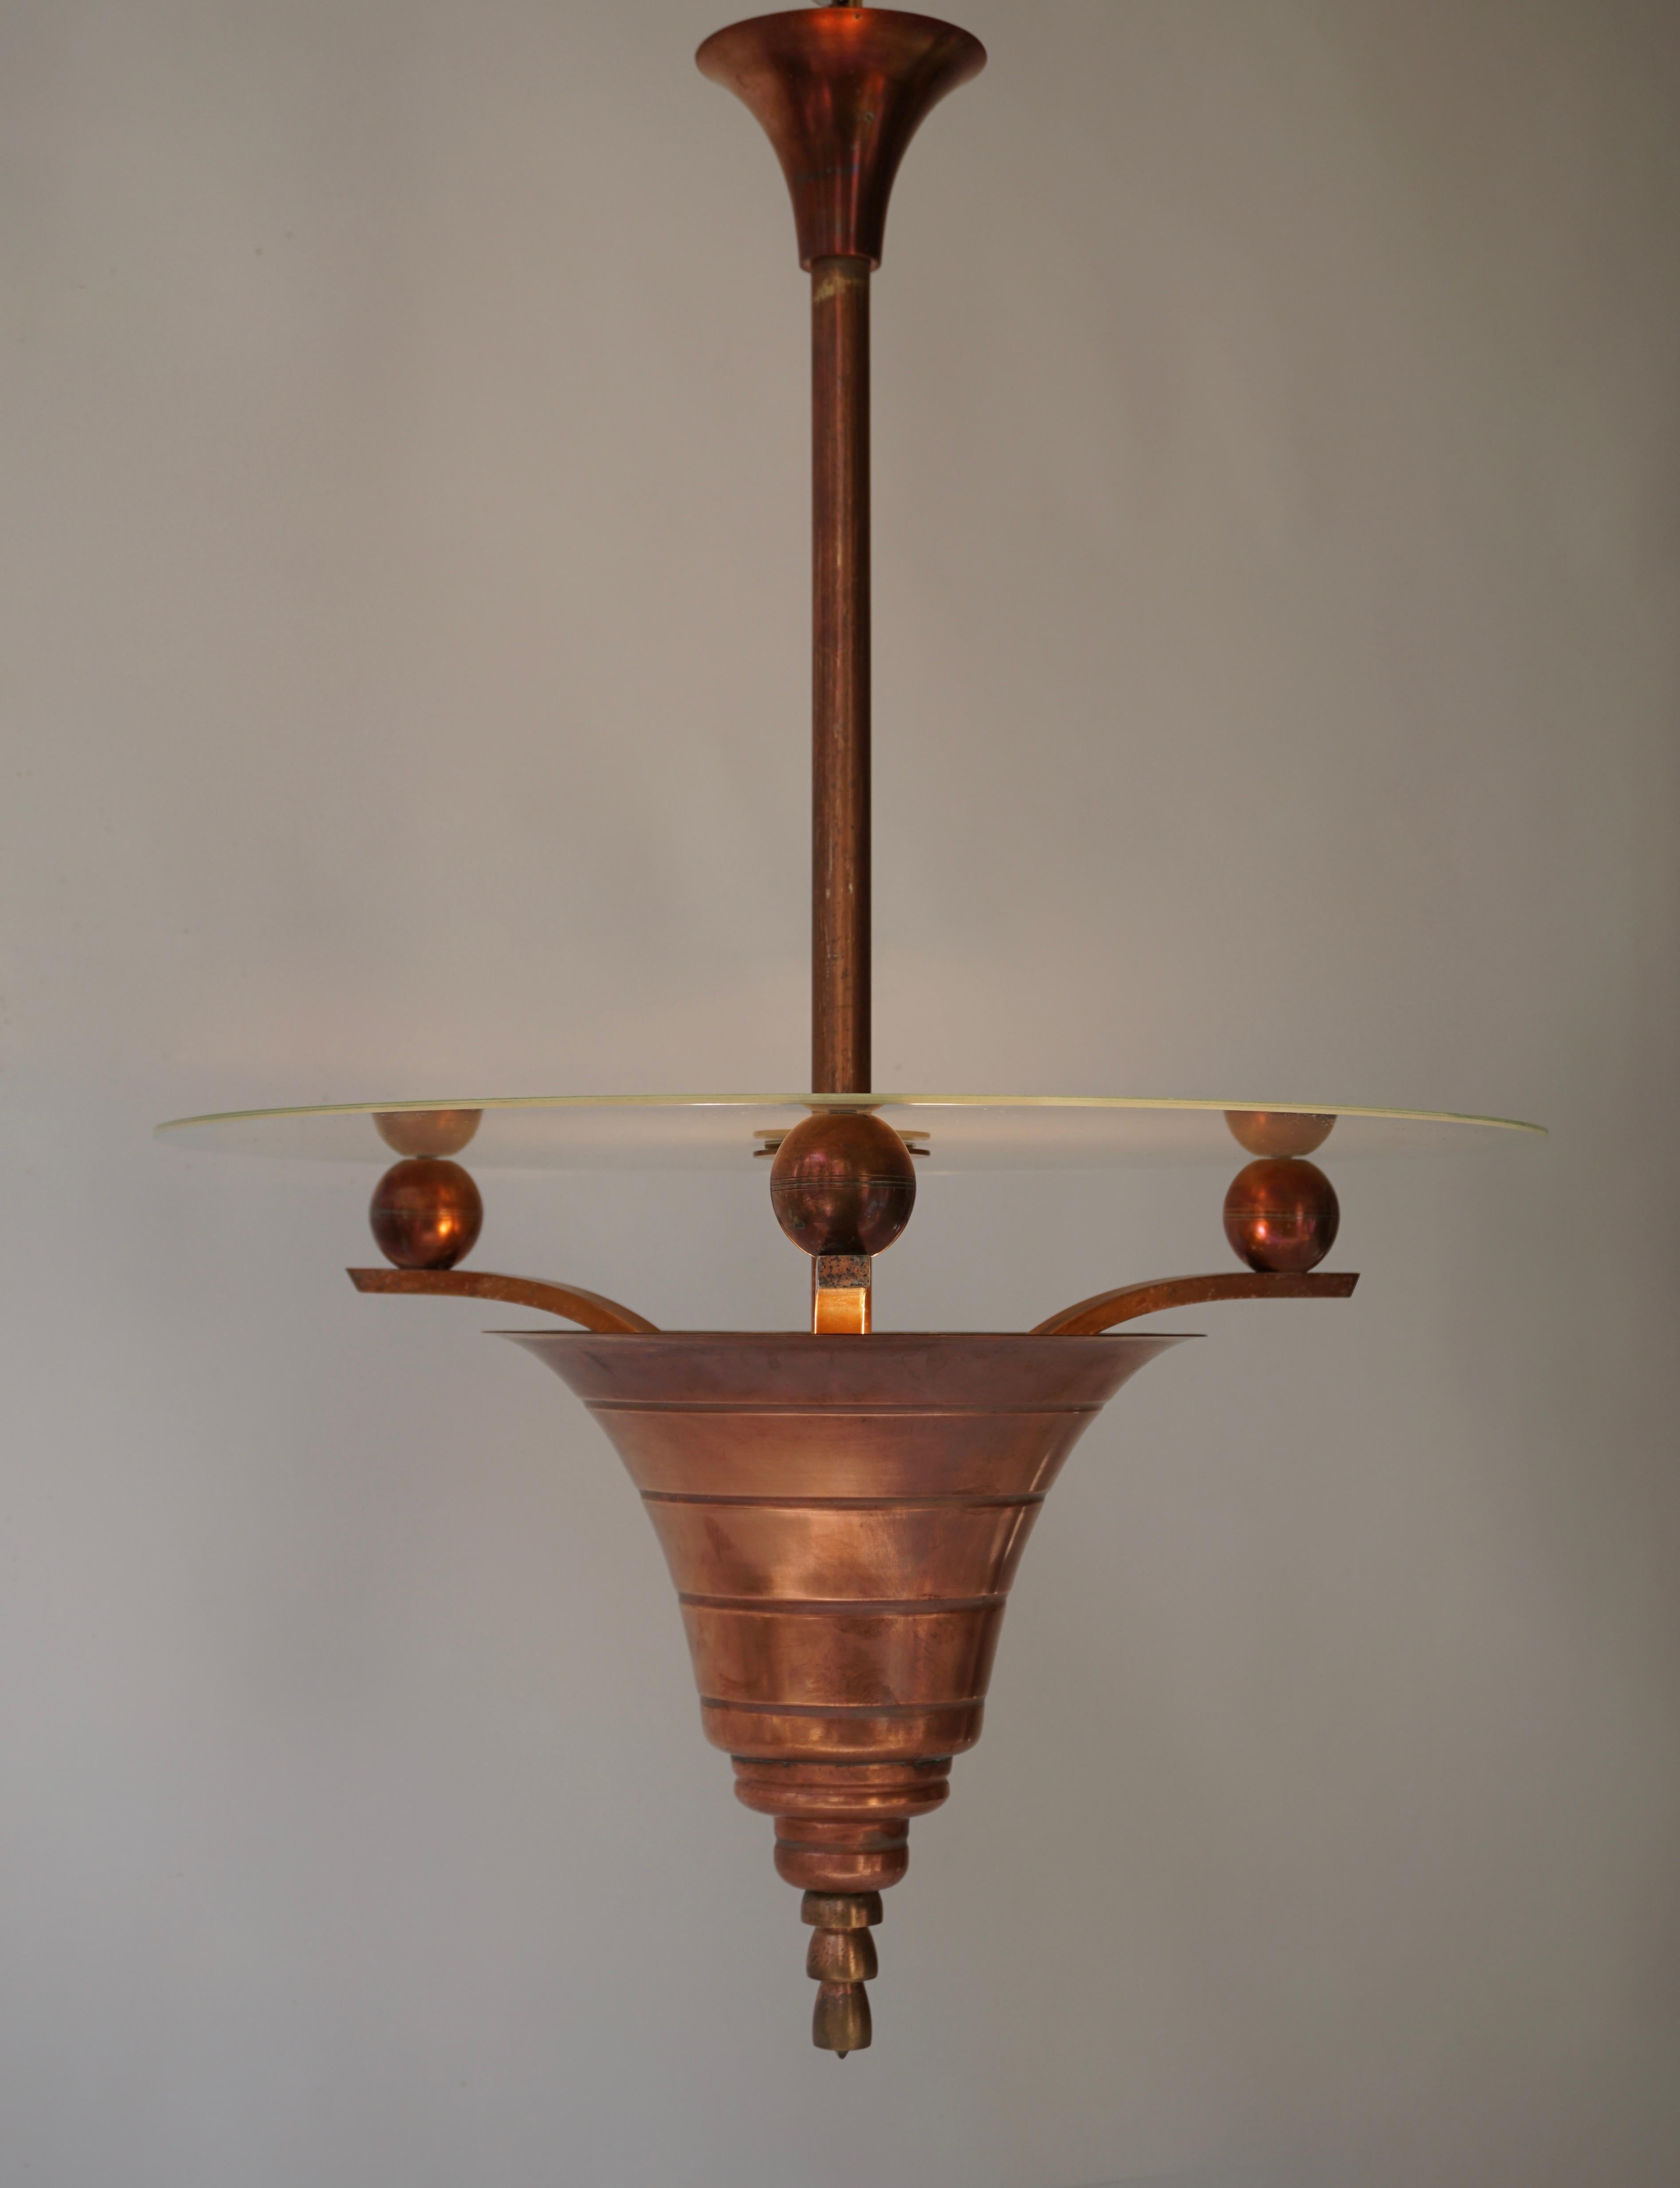 French Art Deco copper chandelier.
Measures: Diameter 50 cm.
Height 75 cm.
3 E27 bulbs.